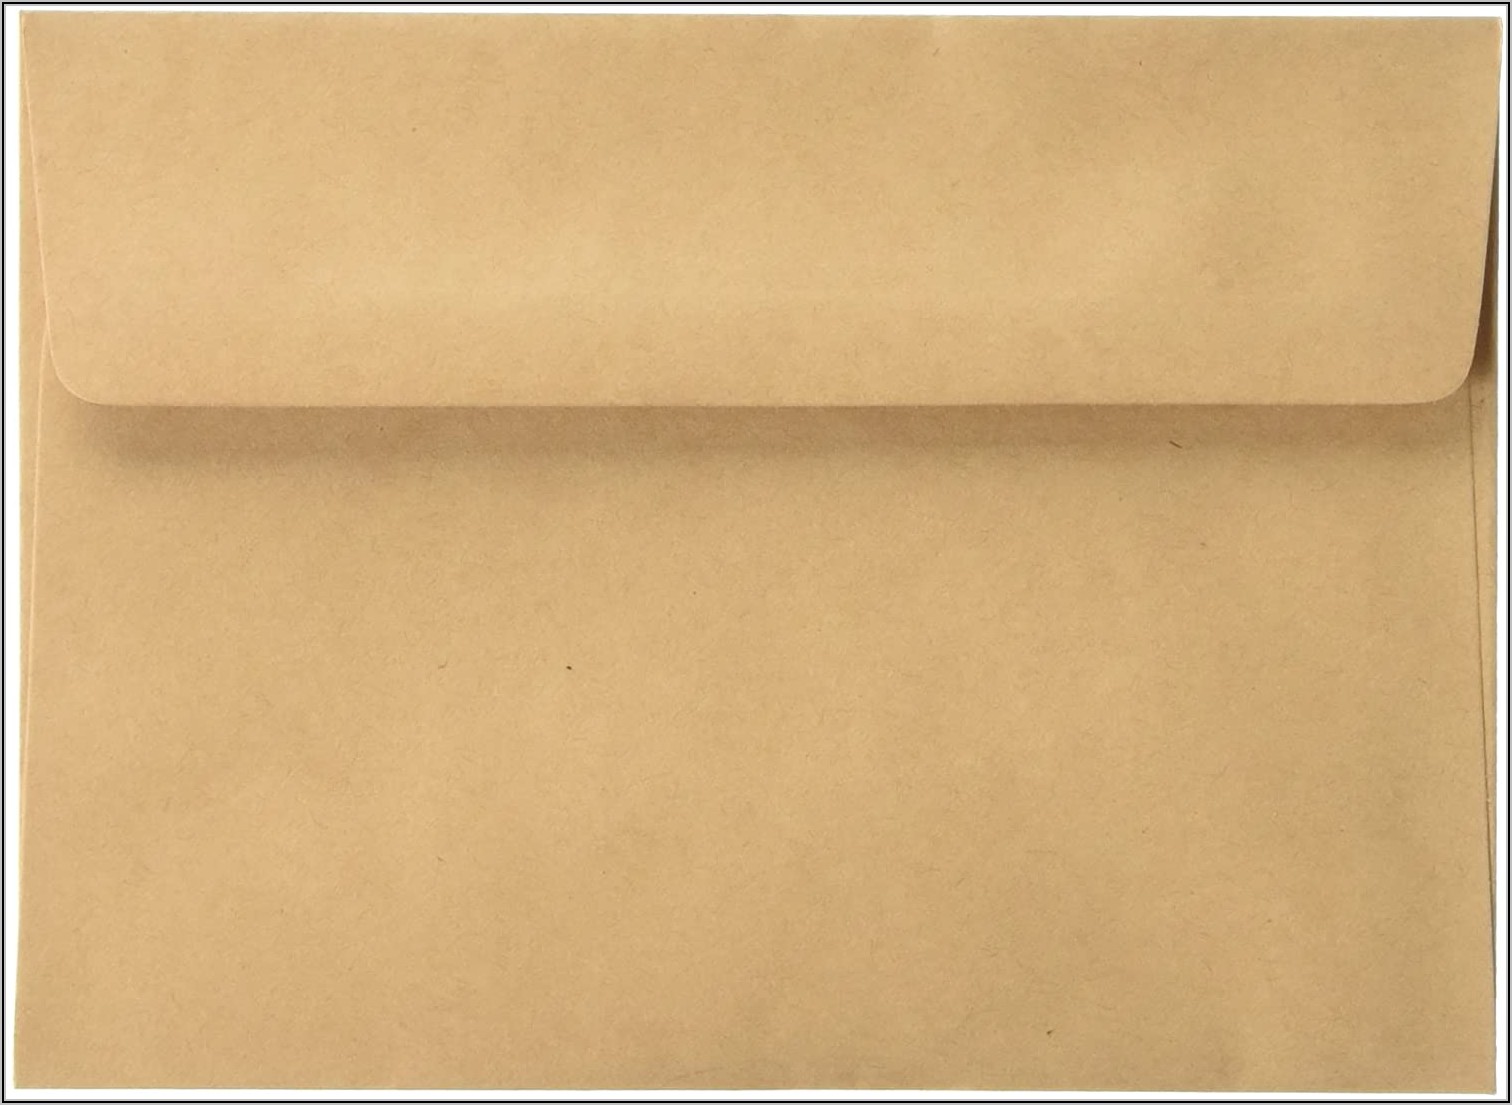 5 X 7 Envelopes Michaels